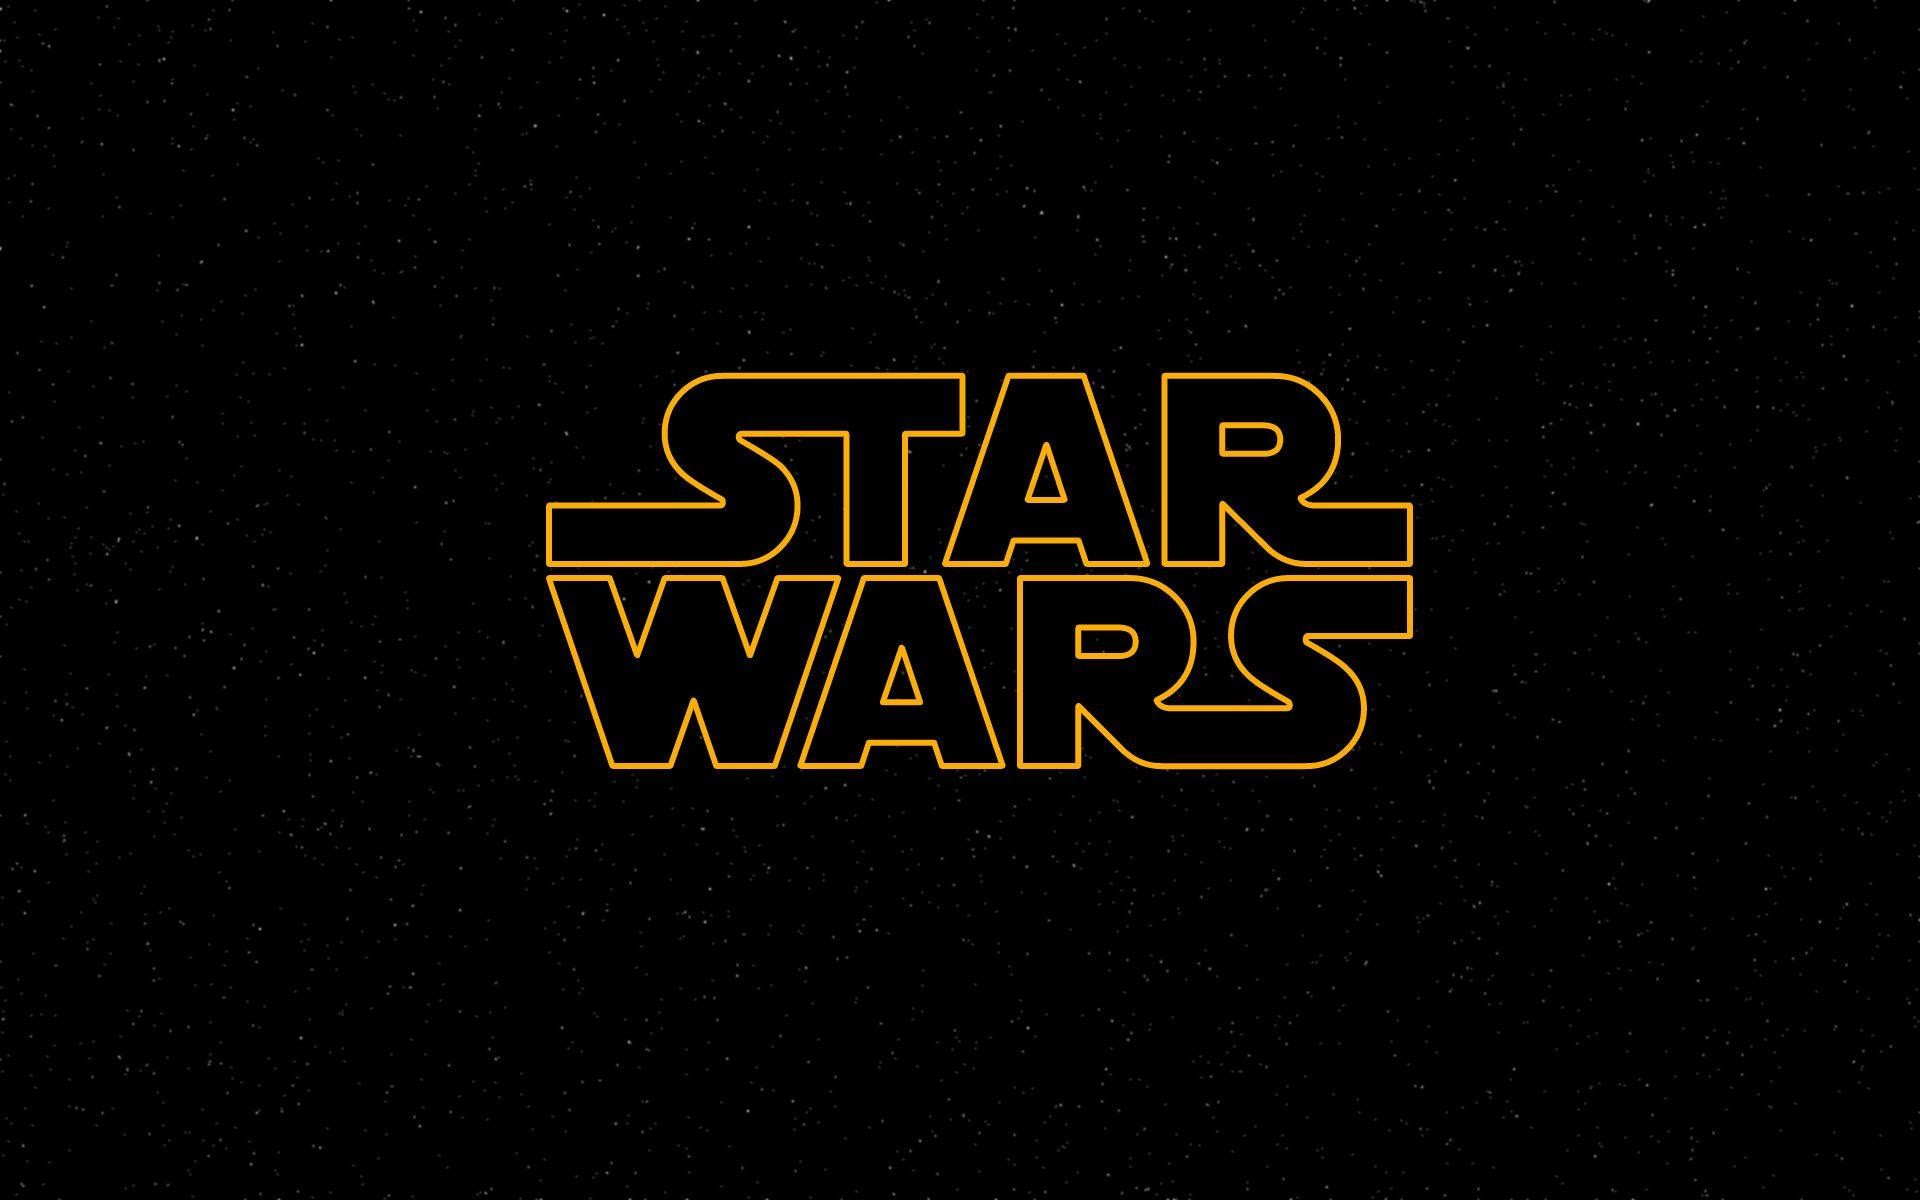 Star Wars Logo Wallpapers – Full HD wallpaper search